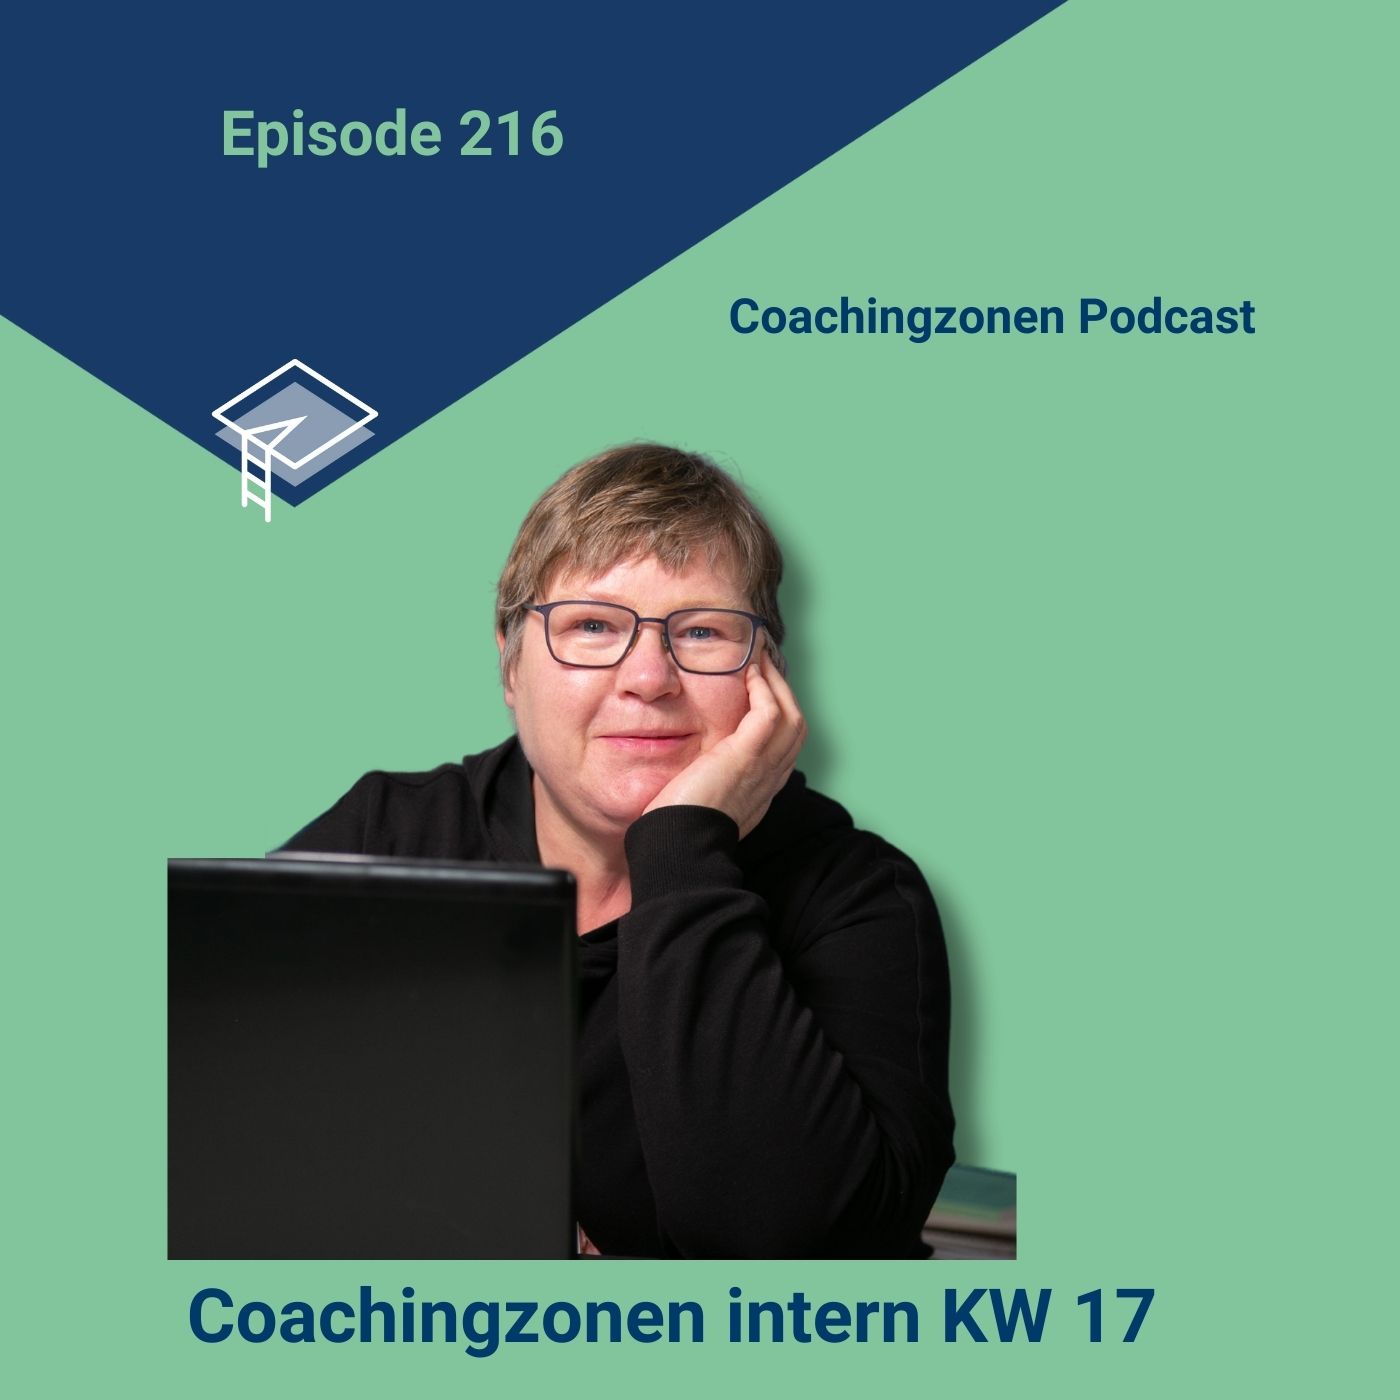 Coachingzonen intern KW 17